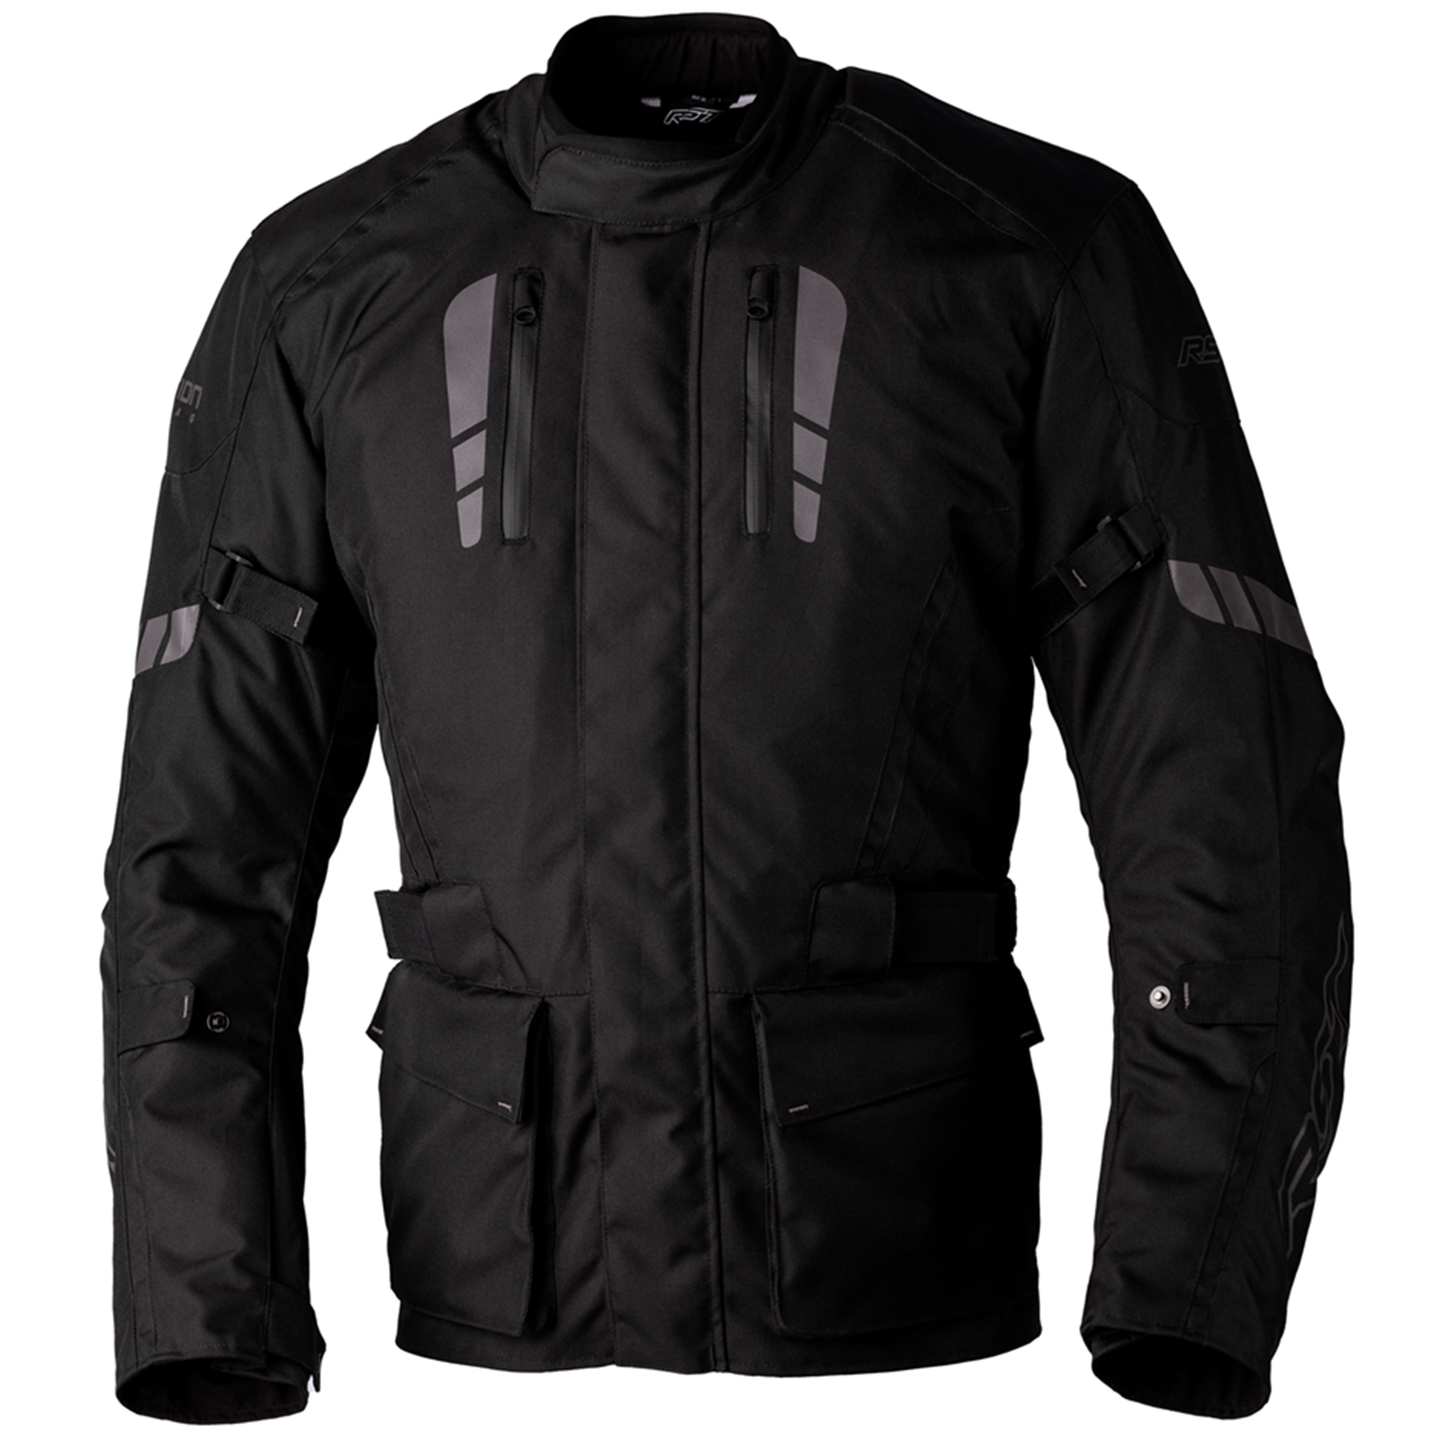 RST Axiom Plus Airbag (CE) Men's Textile Jacket - Black (2985)